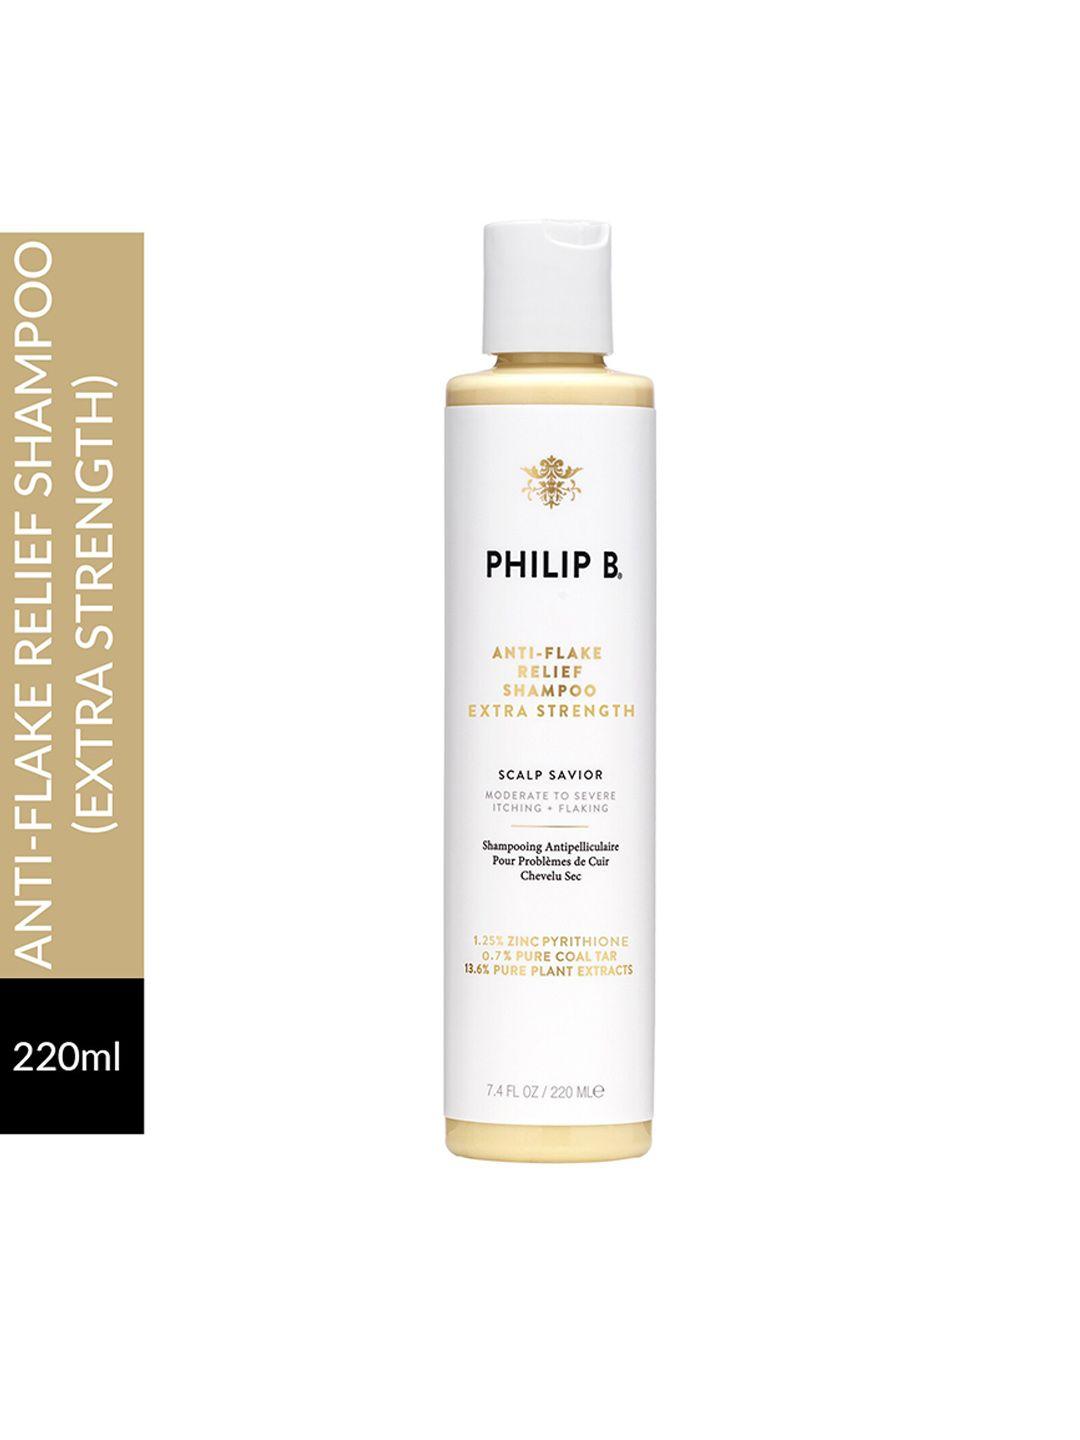 philip b scalp savior anti-flake relief shampoo for extra strength - 220 ml